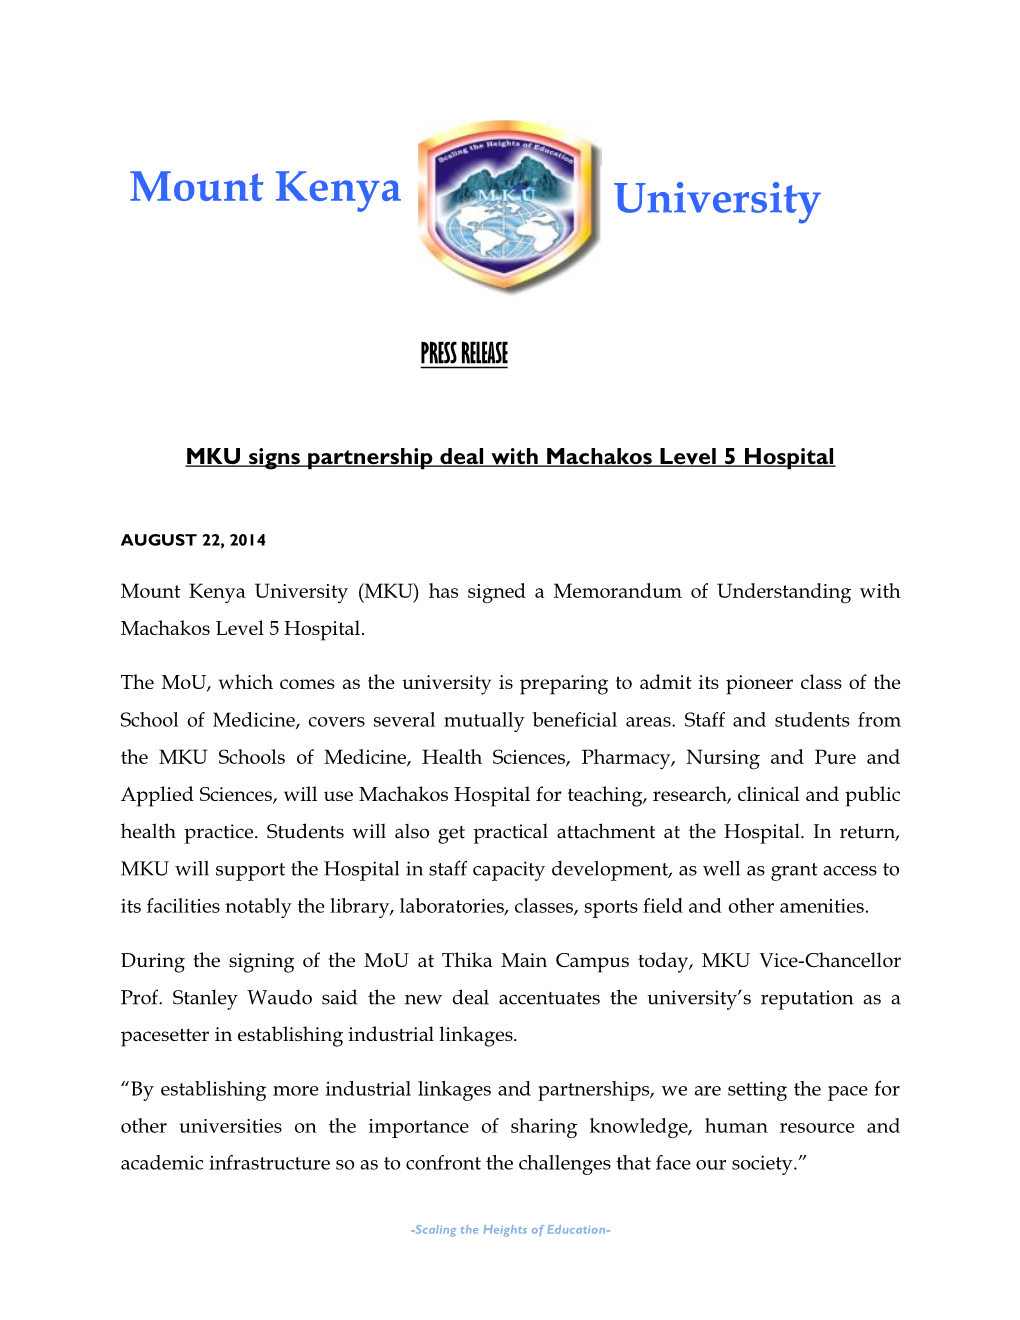 Mount Kenya University and Machakos Hospital